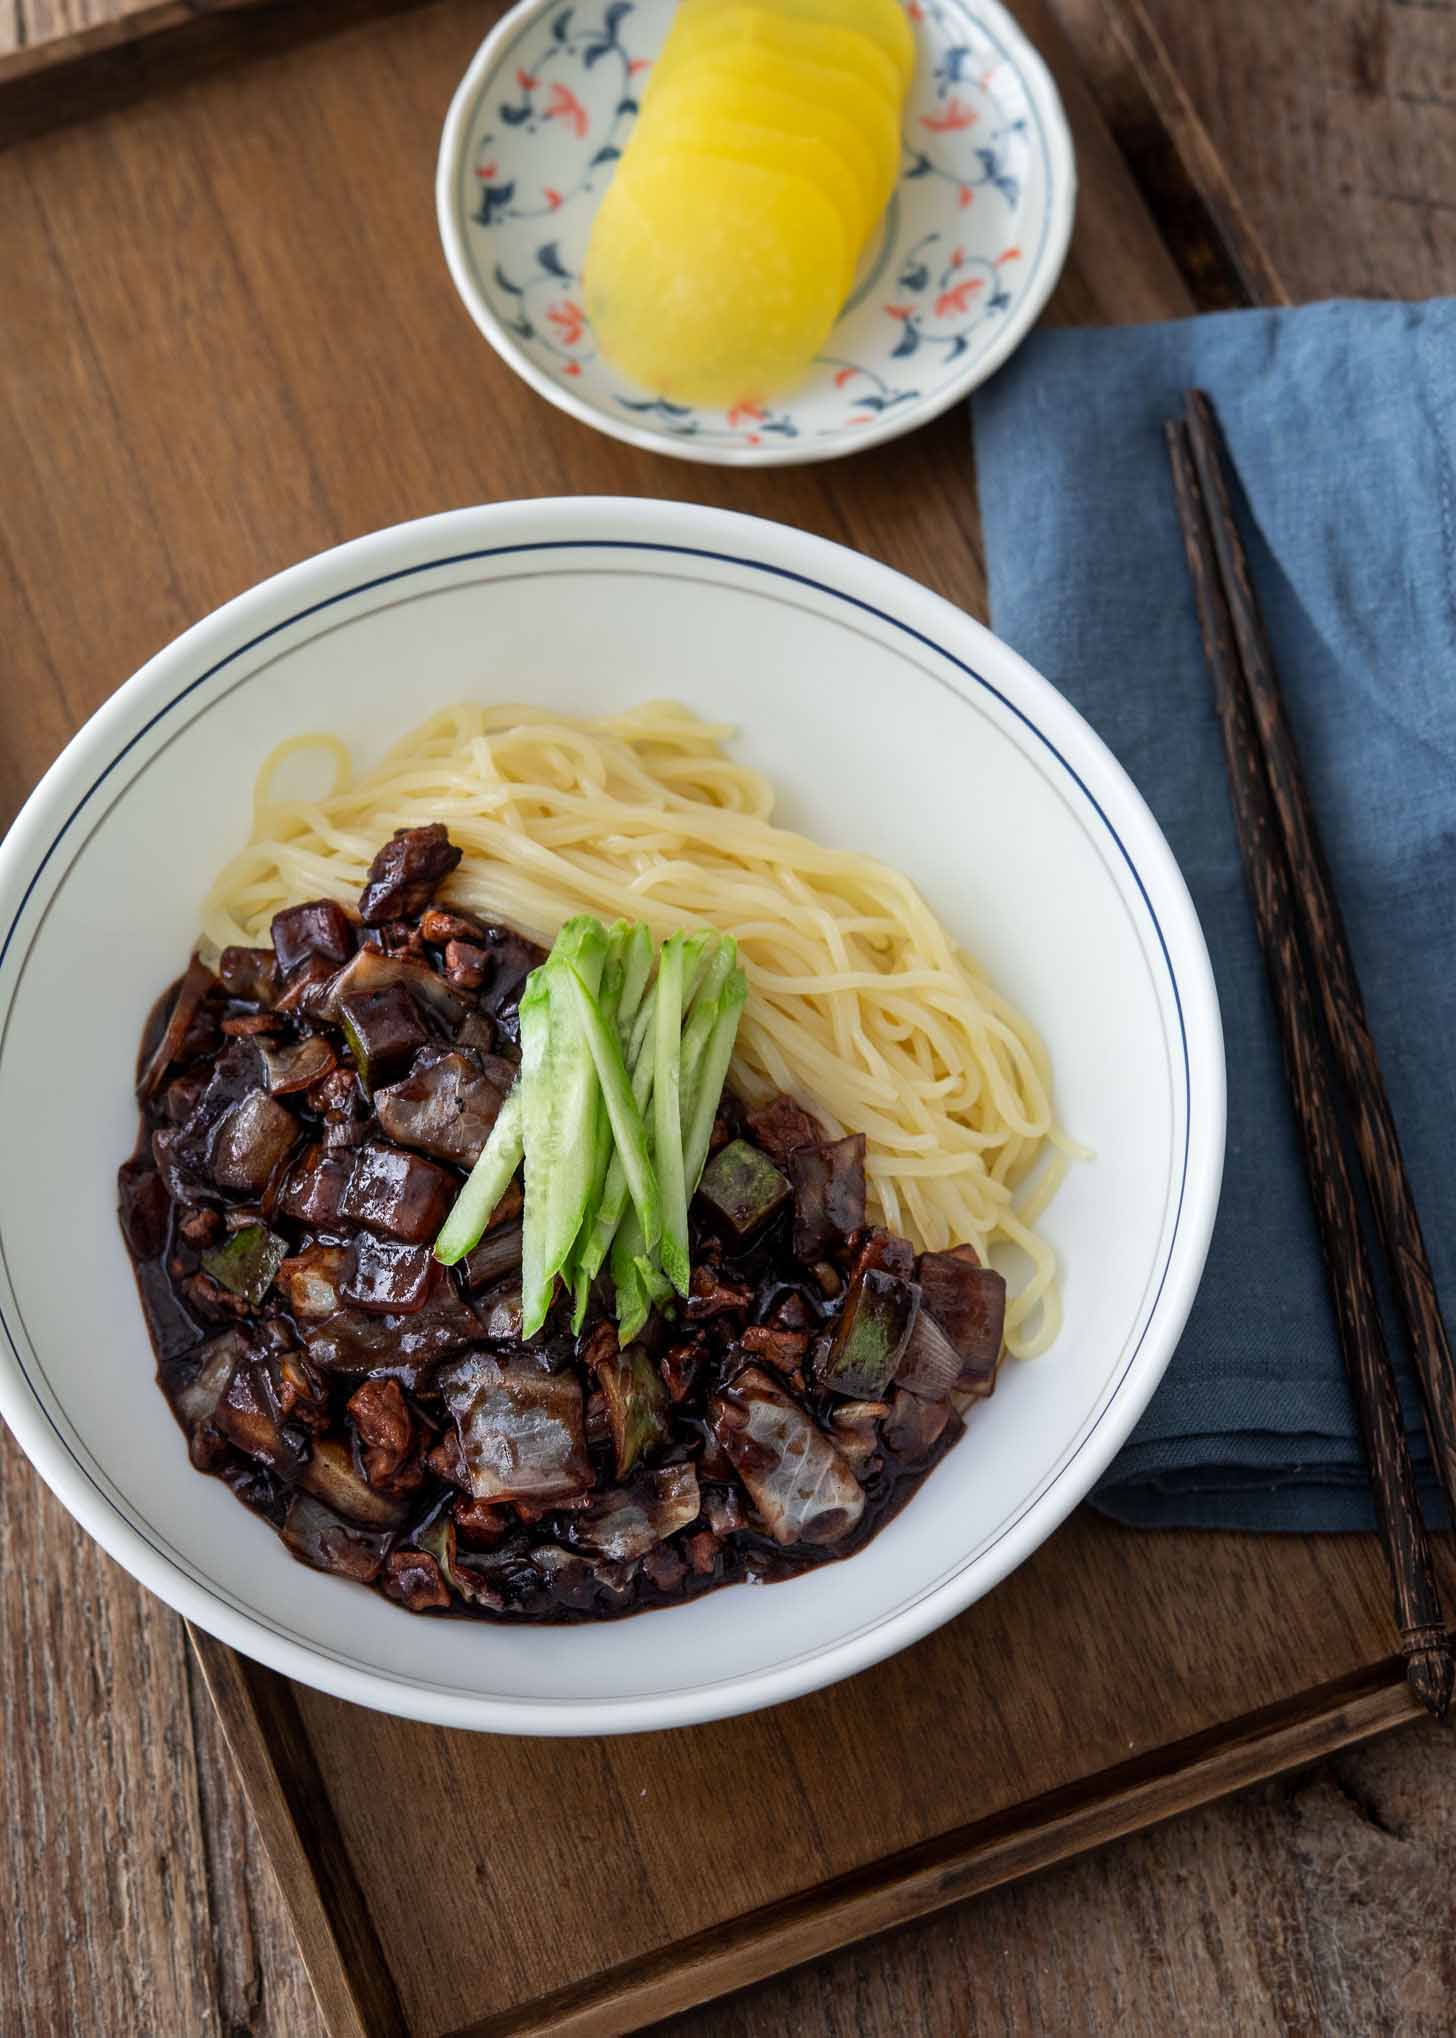 A bowl of jajangmyeon (Korean black bean noodles) in a serving dish.